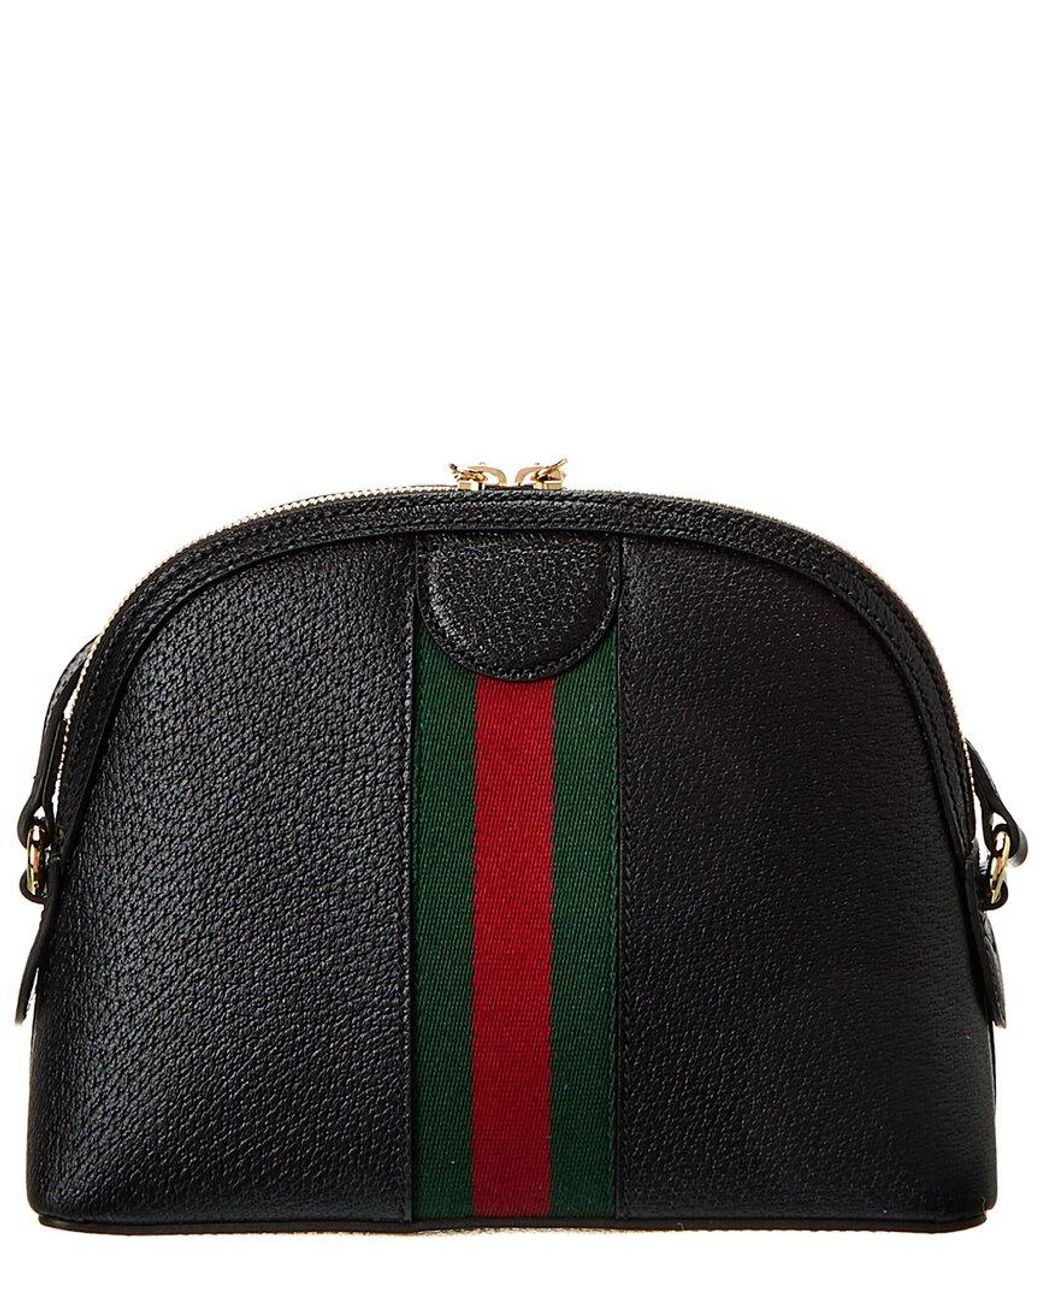 Gucci Ophidia Leather Shoulder Bag in Black | Lyst